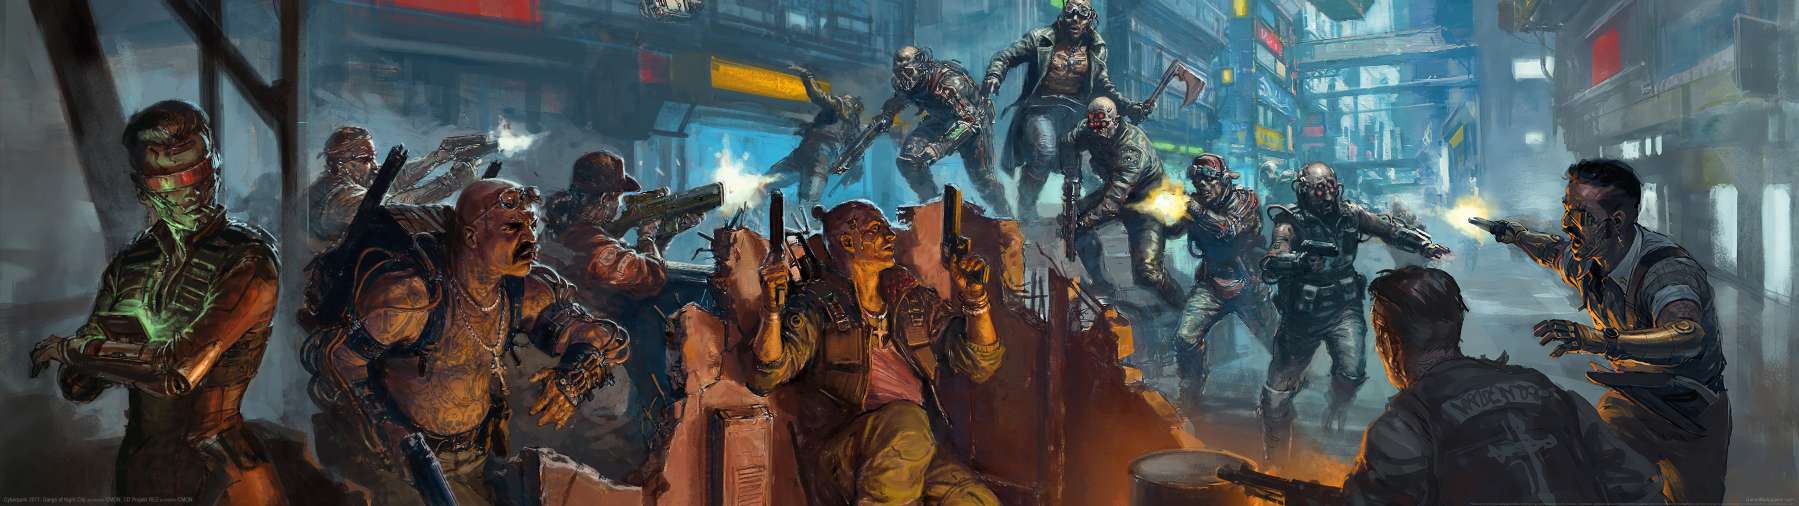 Cyberpunk 2077: Gangs of Night City wallpaper or background